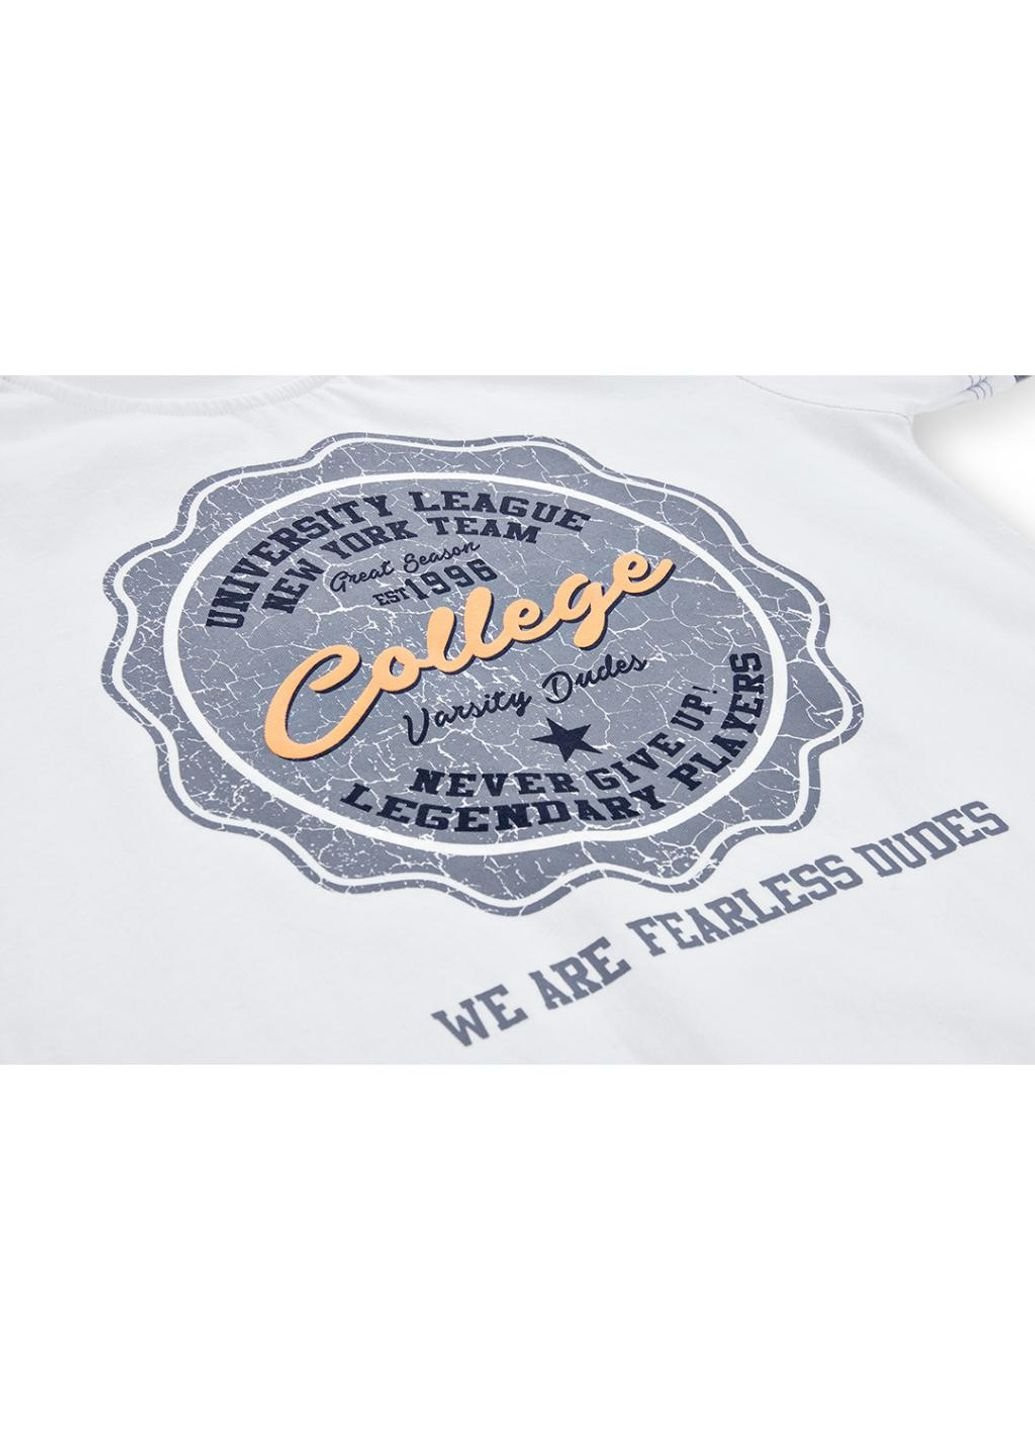 Біла демісезонна футболка дитяча "college" (4678-152b-white) E&H